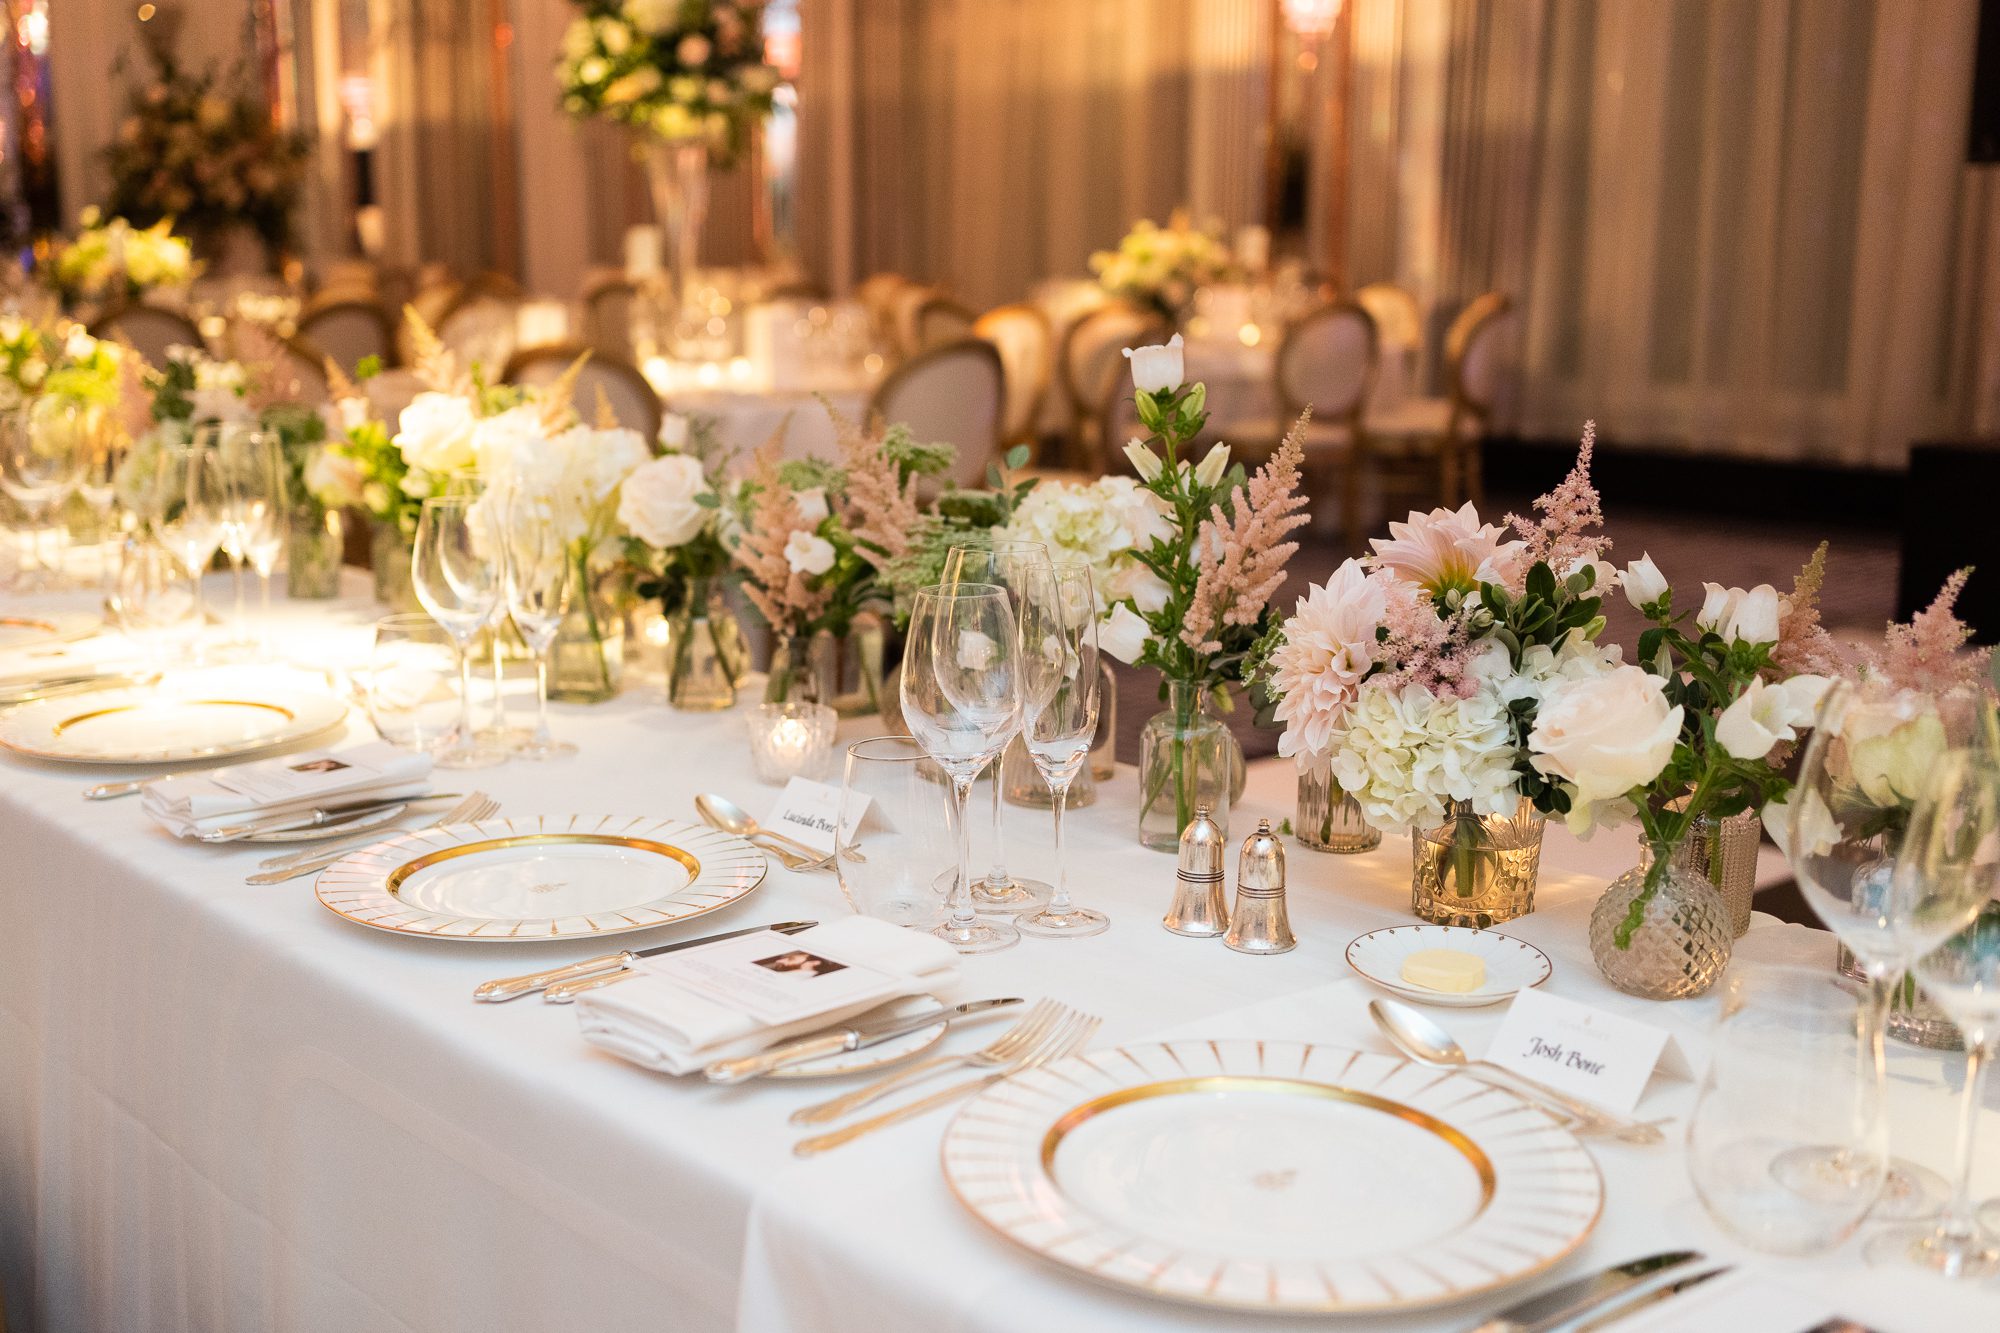 McQueens flowers for a luxury wedding ballroom reception.